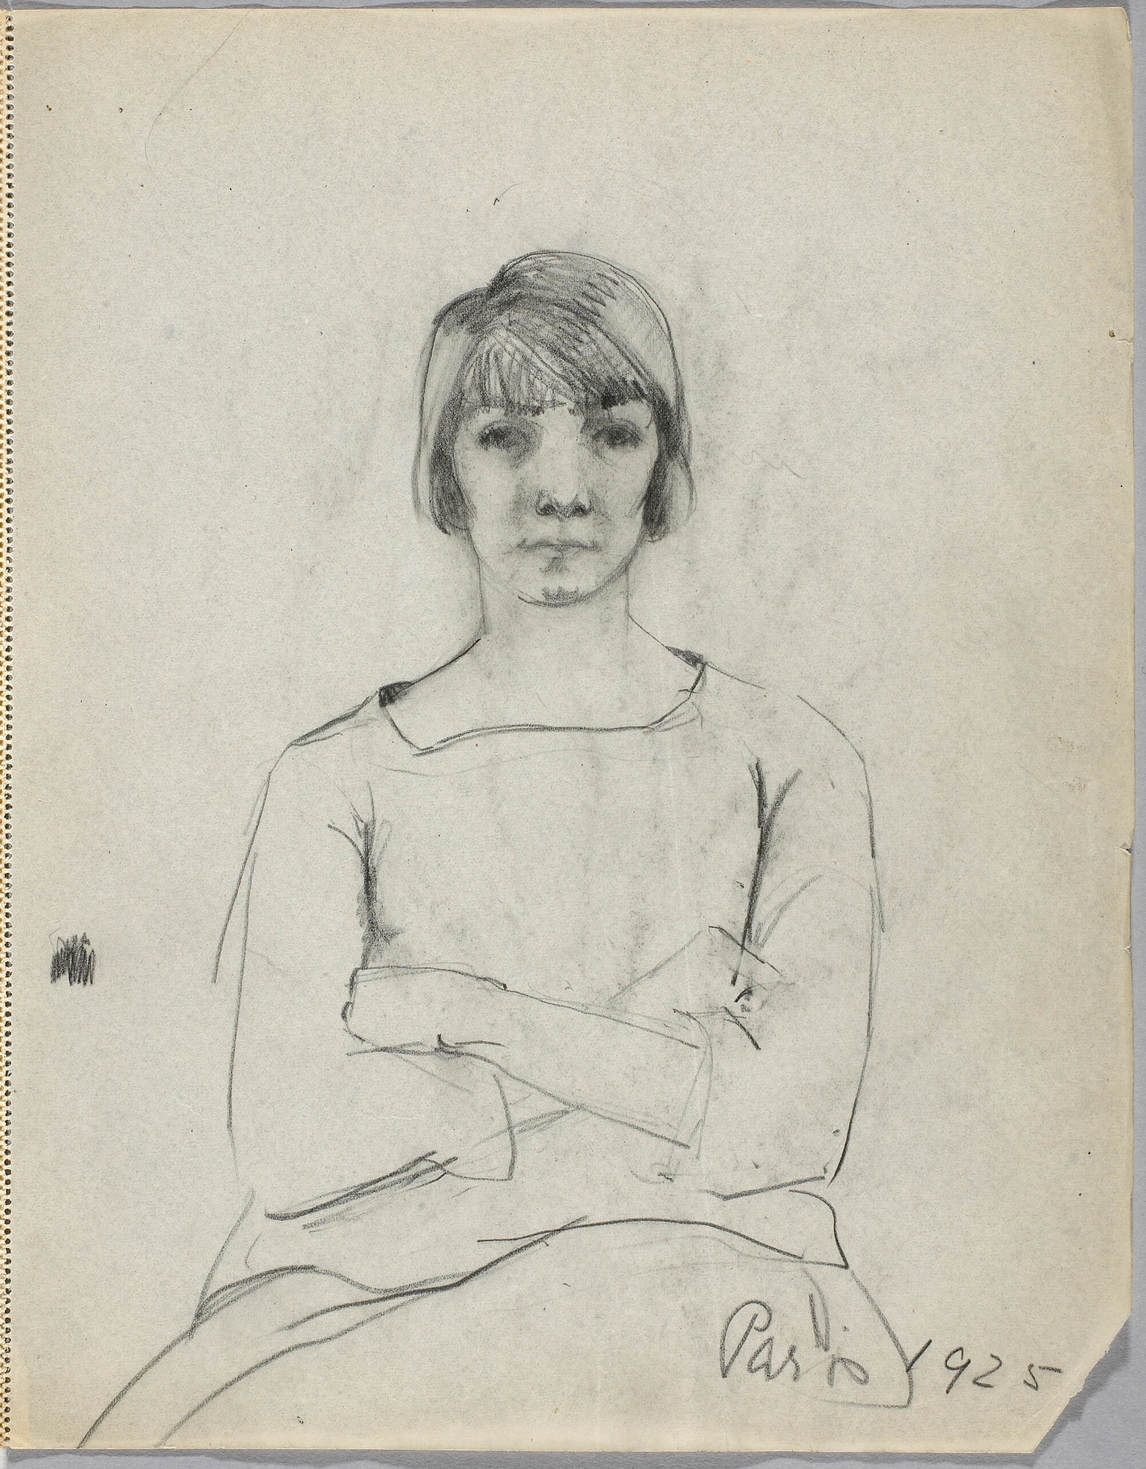 Art Canada Institute, Prudence Heward, Figure Study, 1925, Sketchbook 3